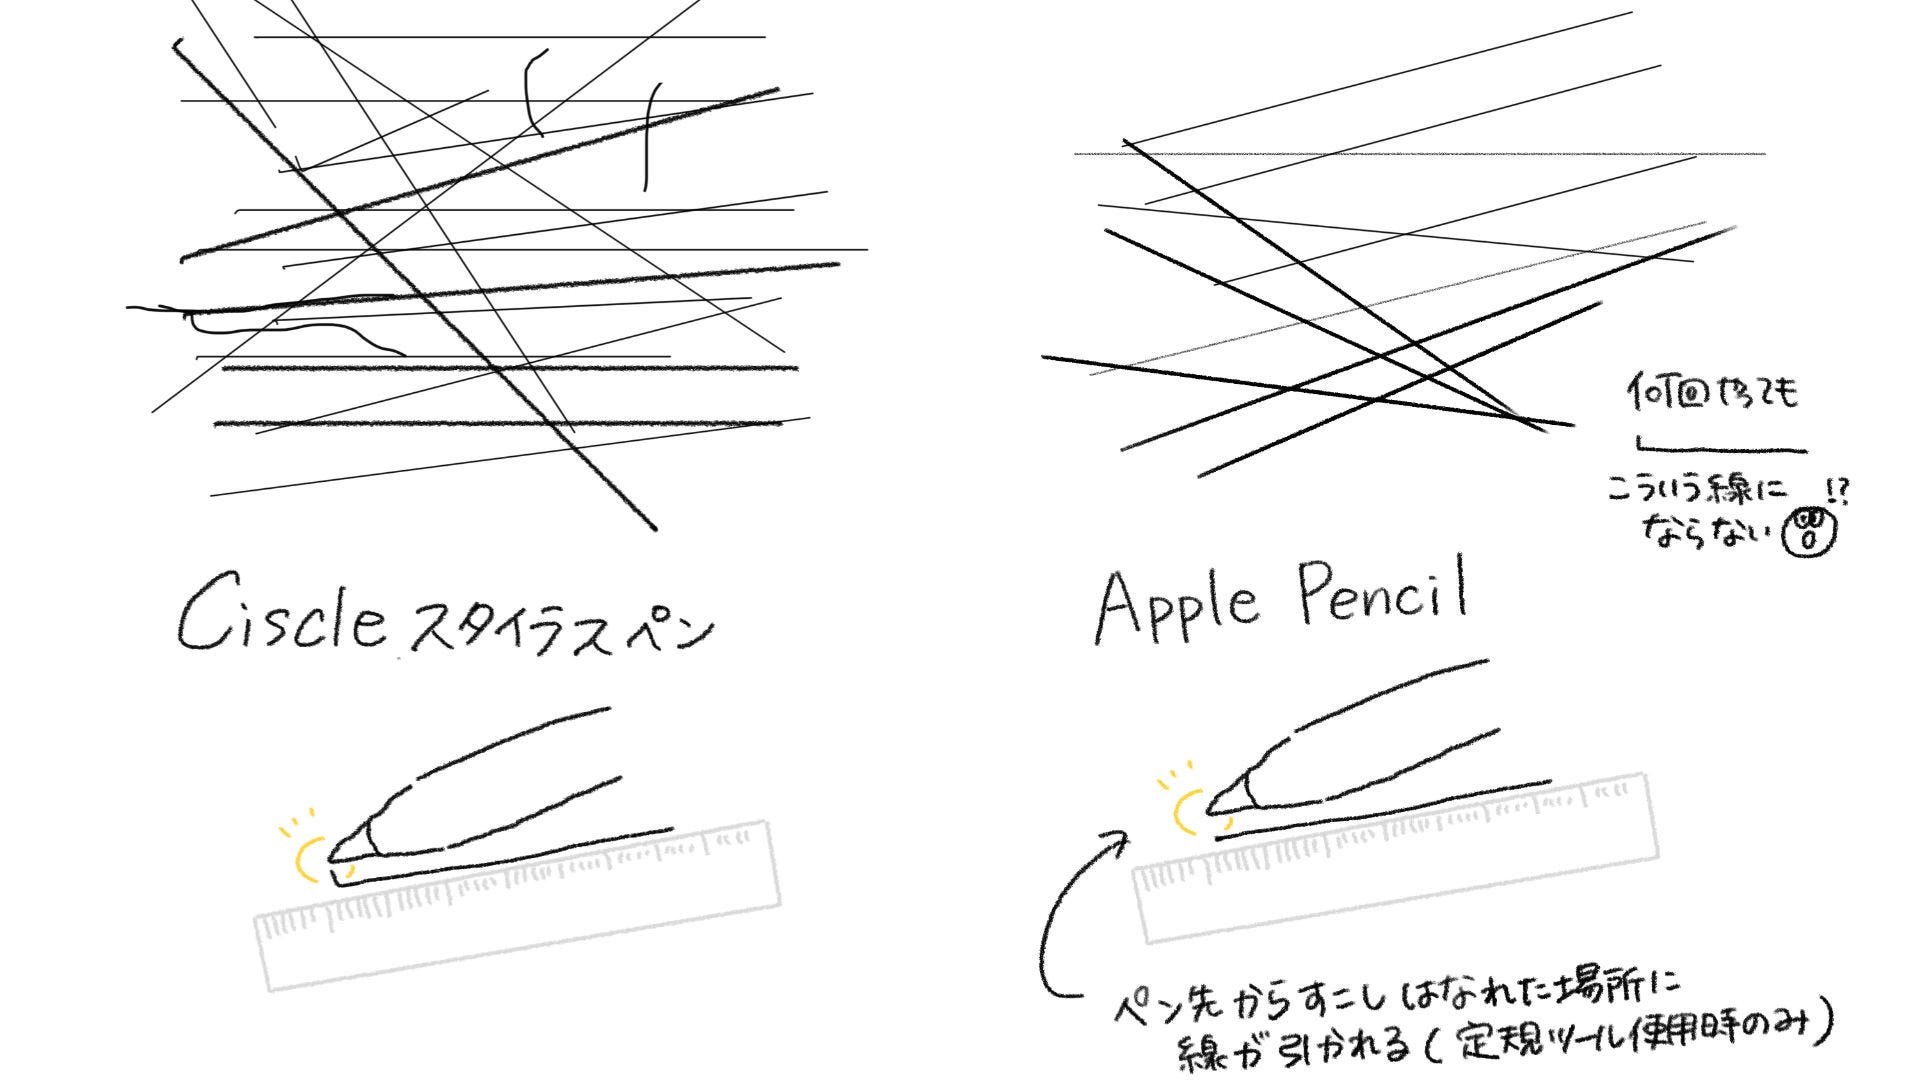 Apple Pencil绗?涓栦唬